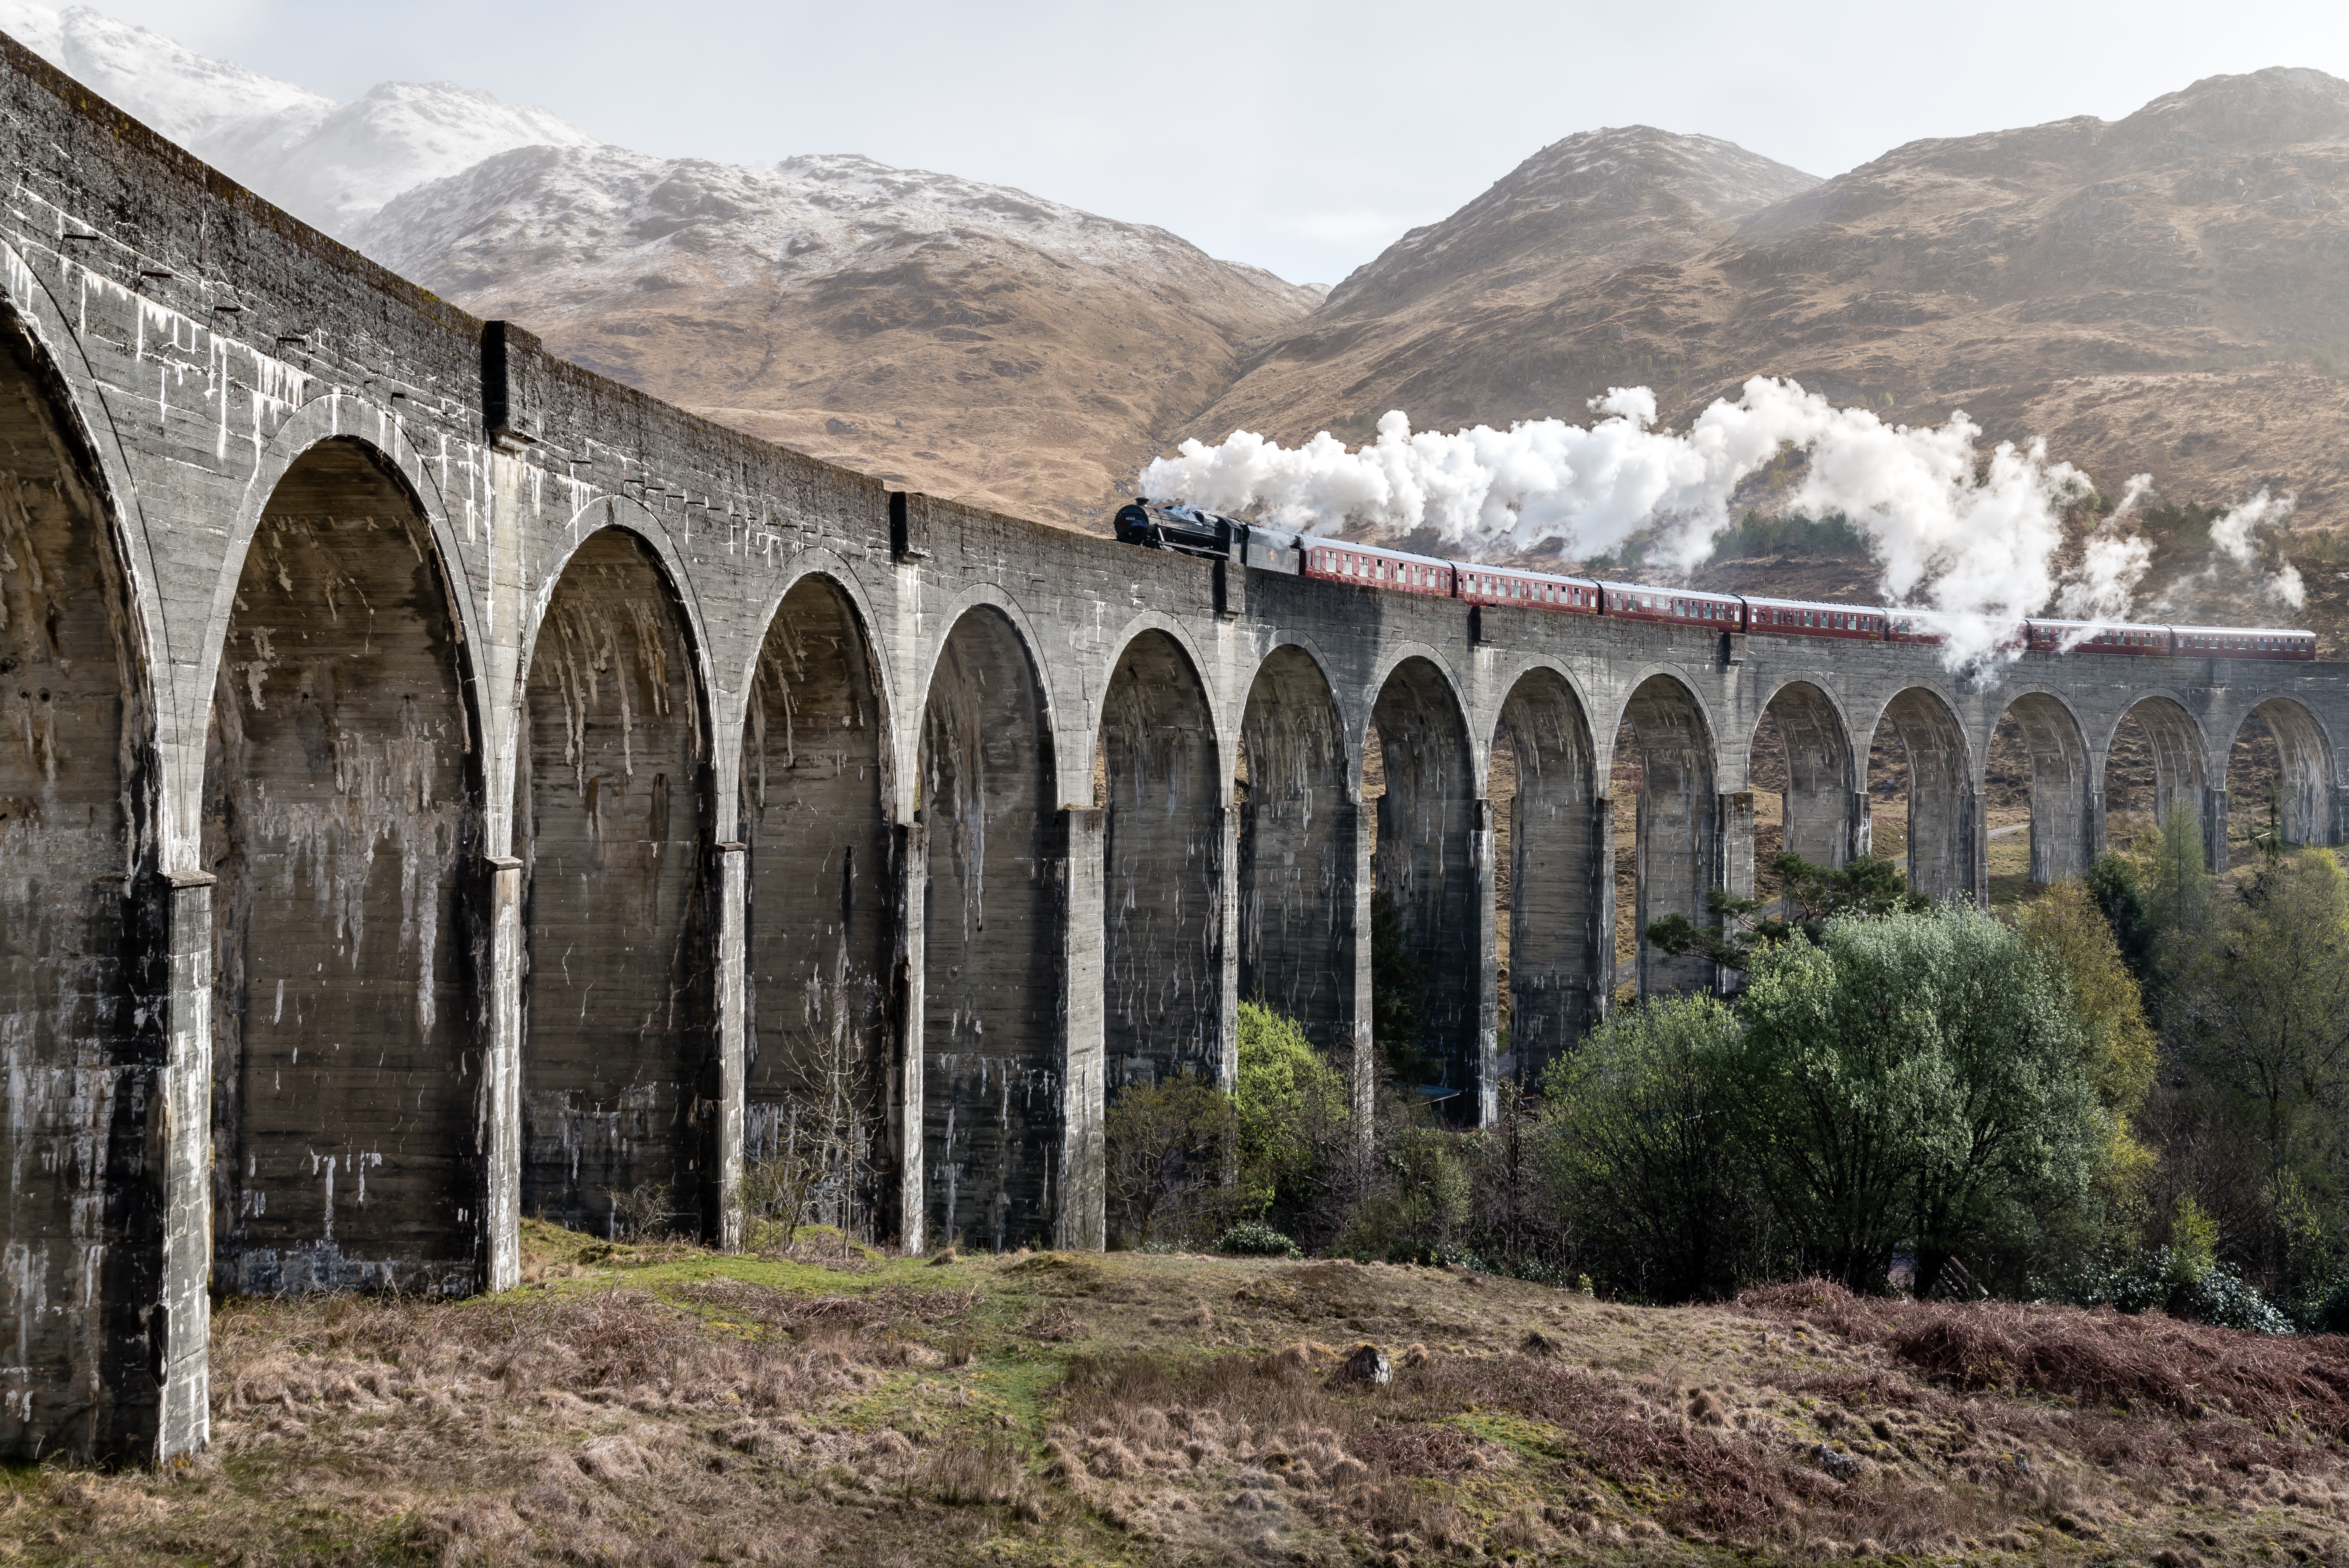 Train With Smoke, Ancient, Stone, Scenic, Scotland, HQ Photo